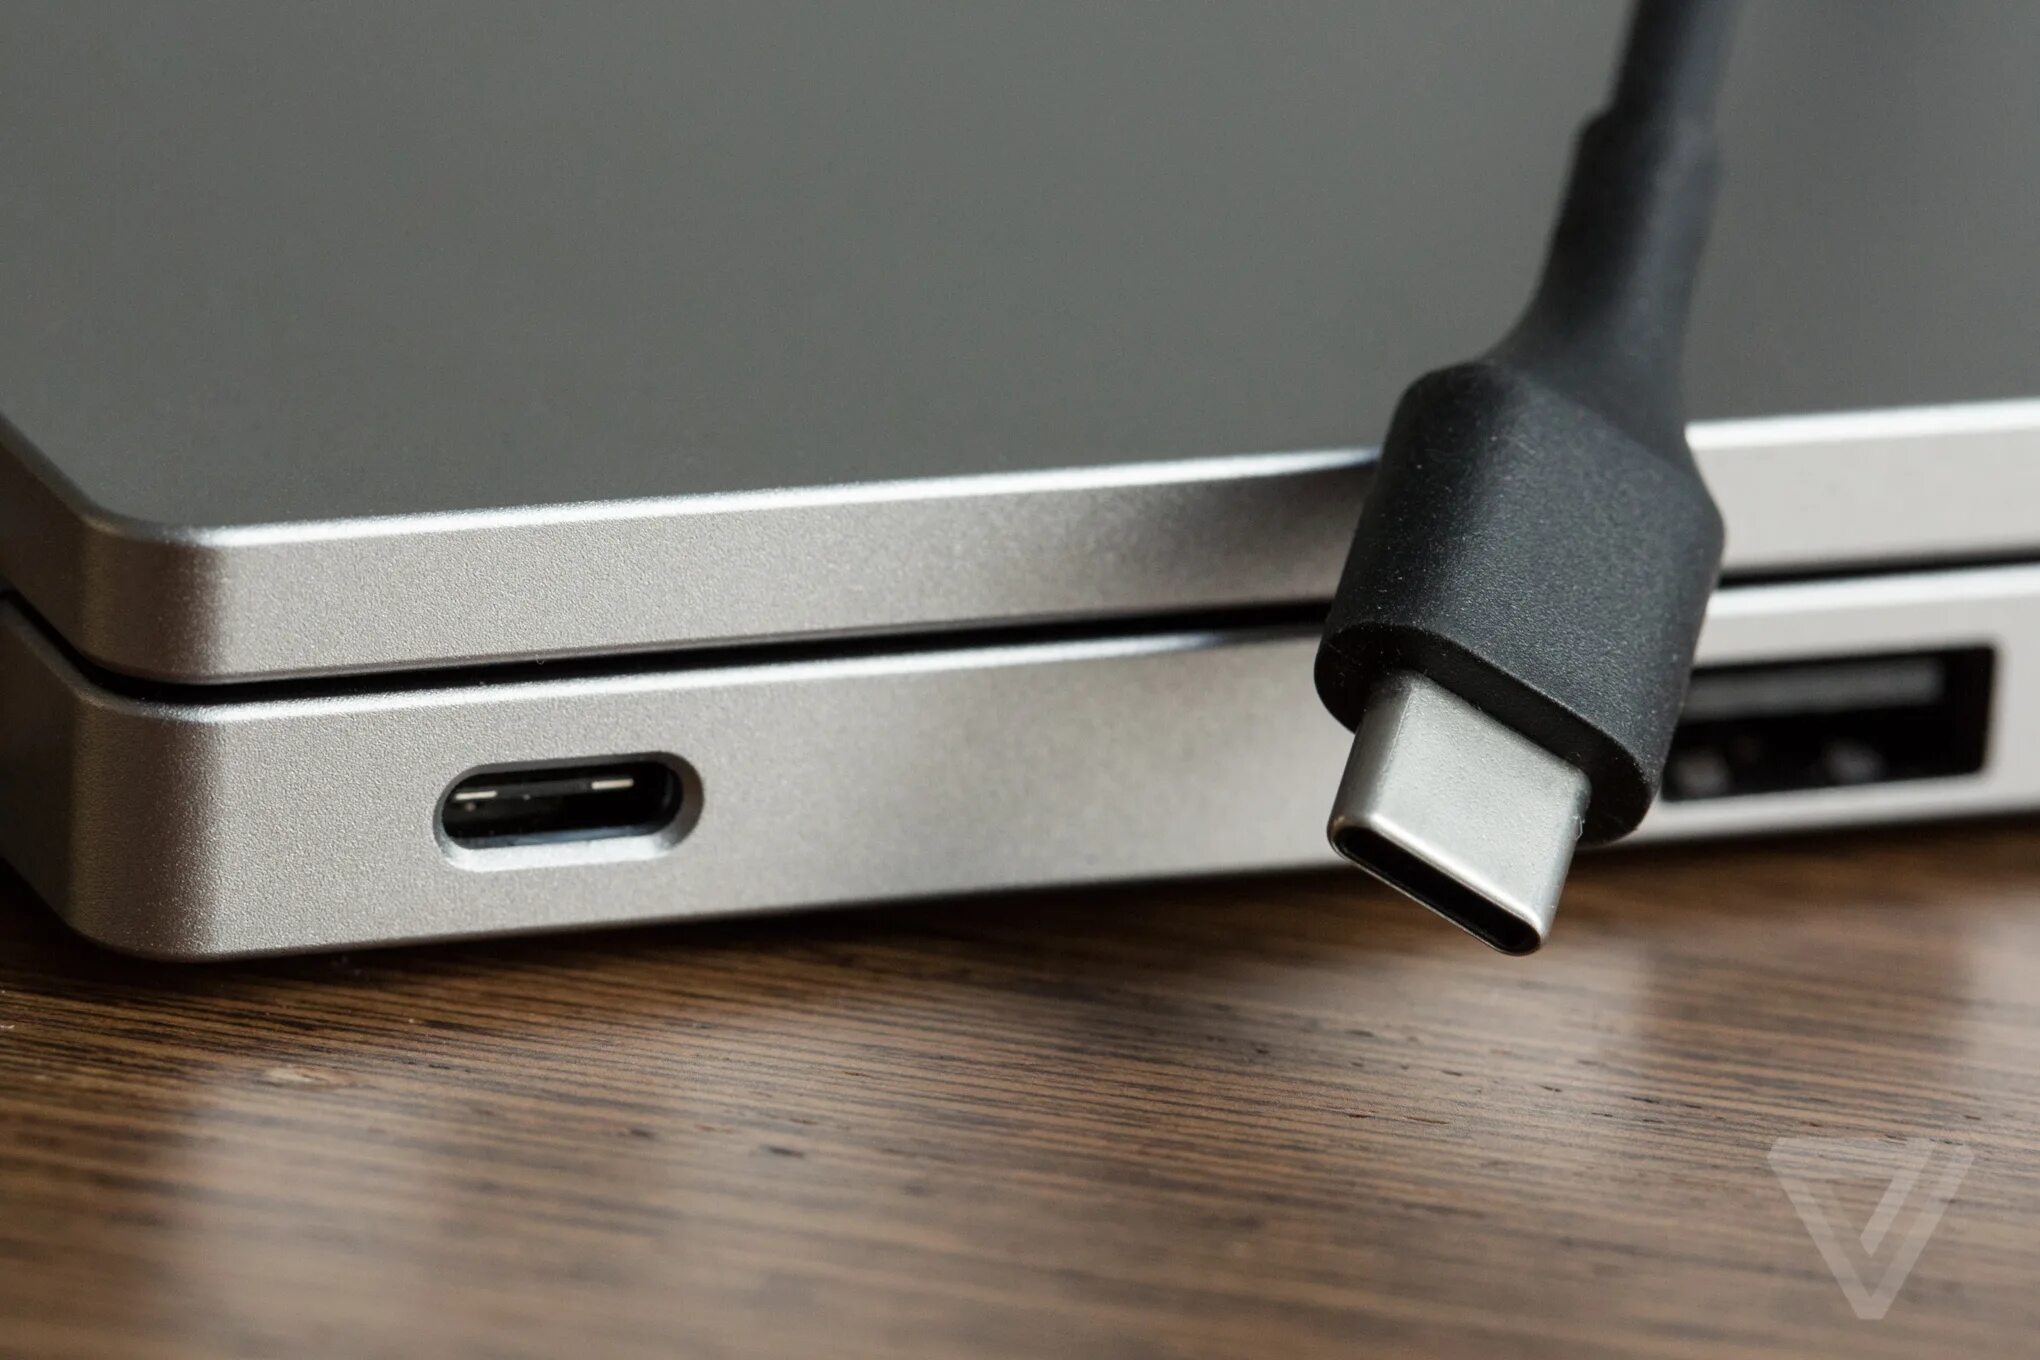 Usb c поколения. Порт USB Type-c. Порт USB 3.0 (Type-c). Порт USB тайп с. Тайп си разъем.